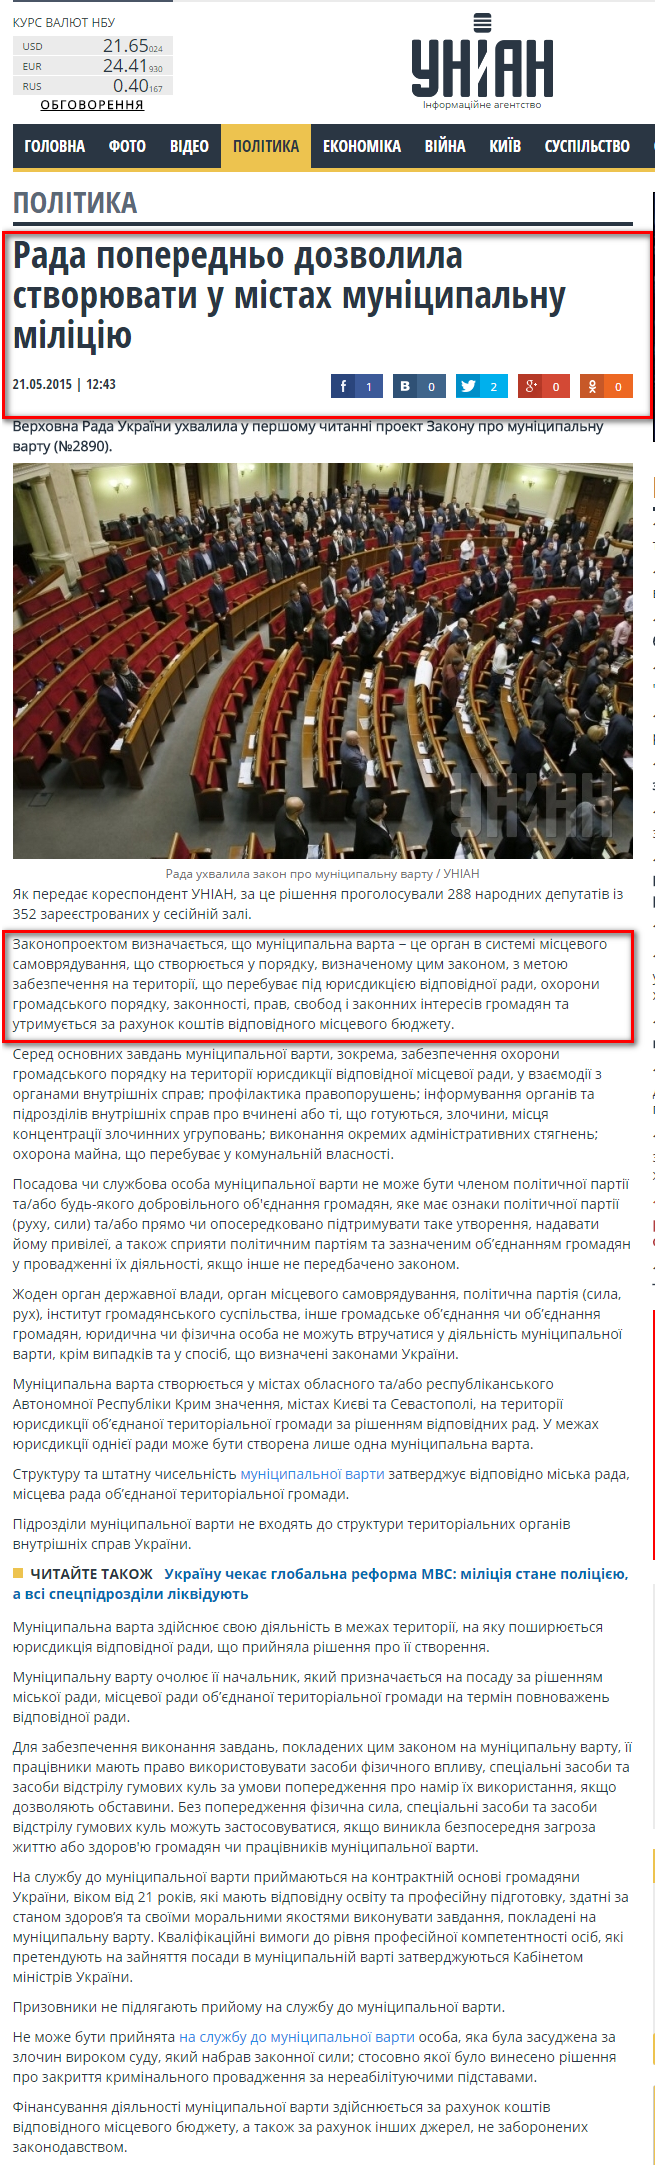 http://www.unian.ua/politics/1080442-rada-poperedno-dozvolila-stvoryuvati-u-mistah-munitsipalnu-militsiyu.html